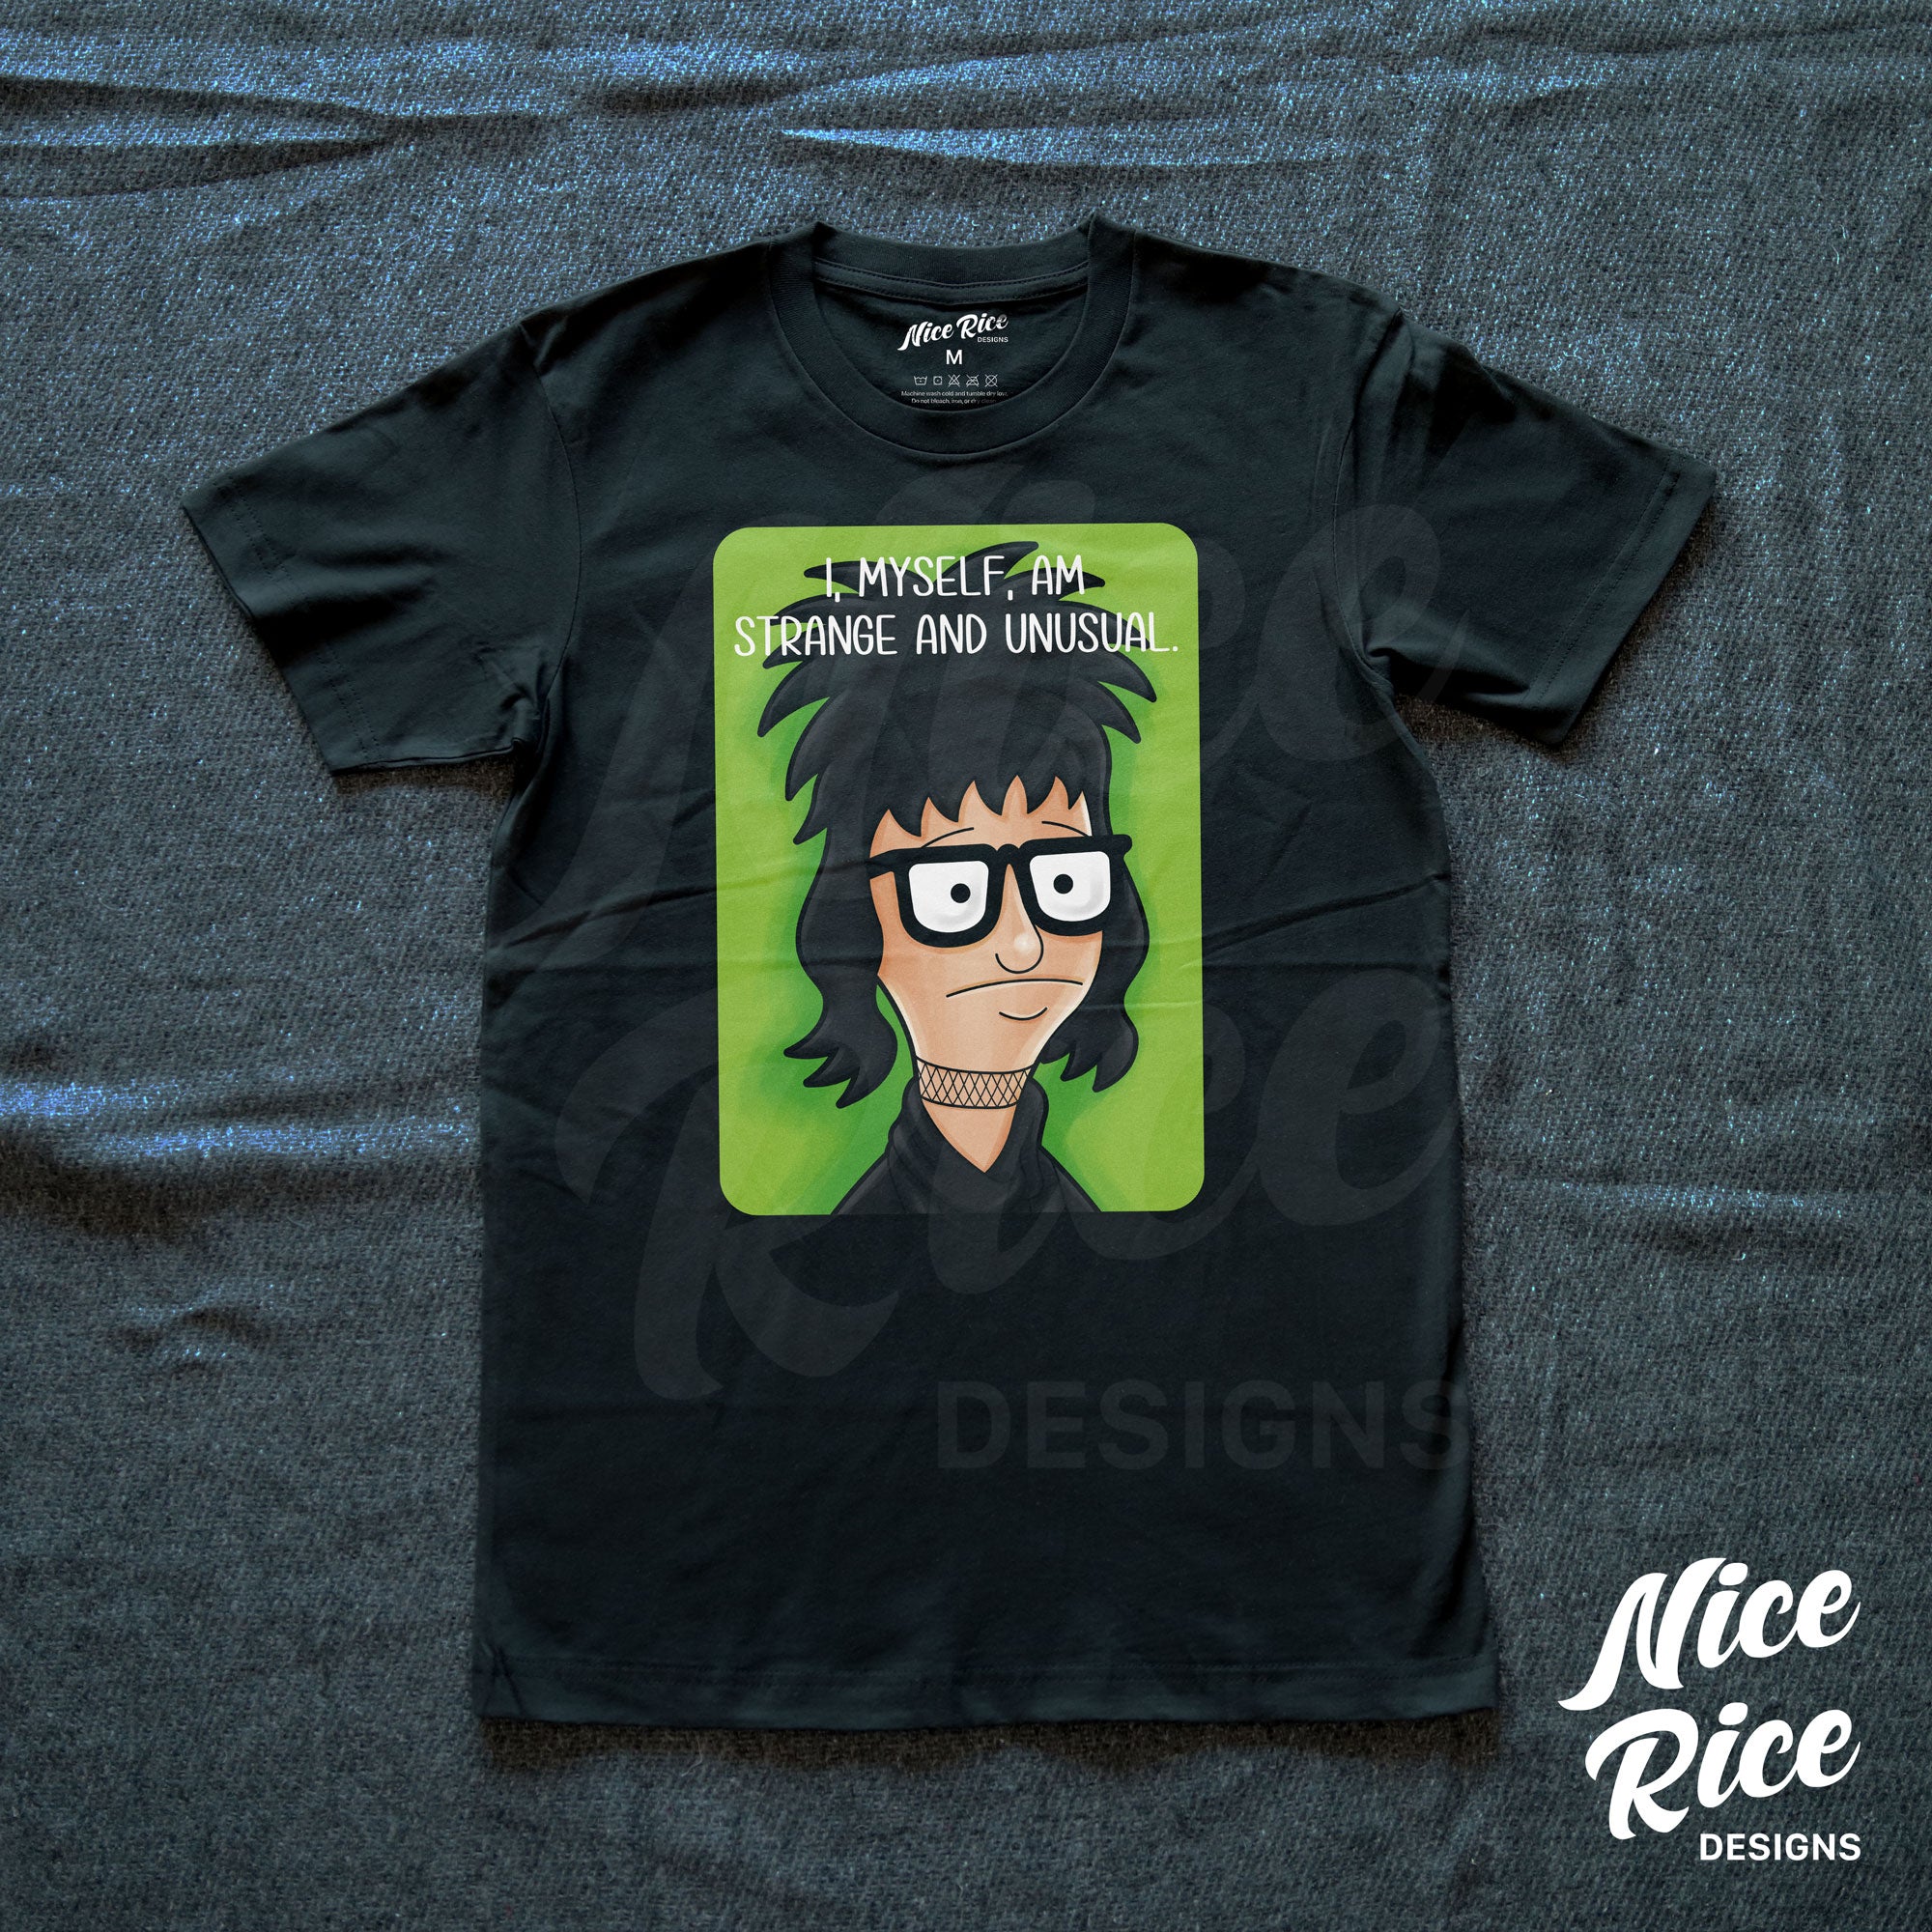 I, myself, am strange and unusual Shirt by Nice Rice Designs